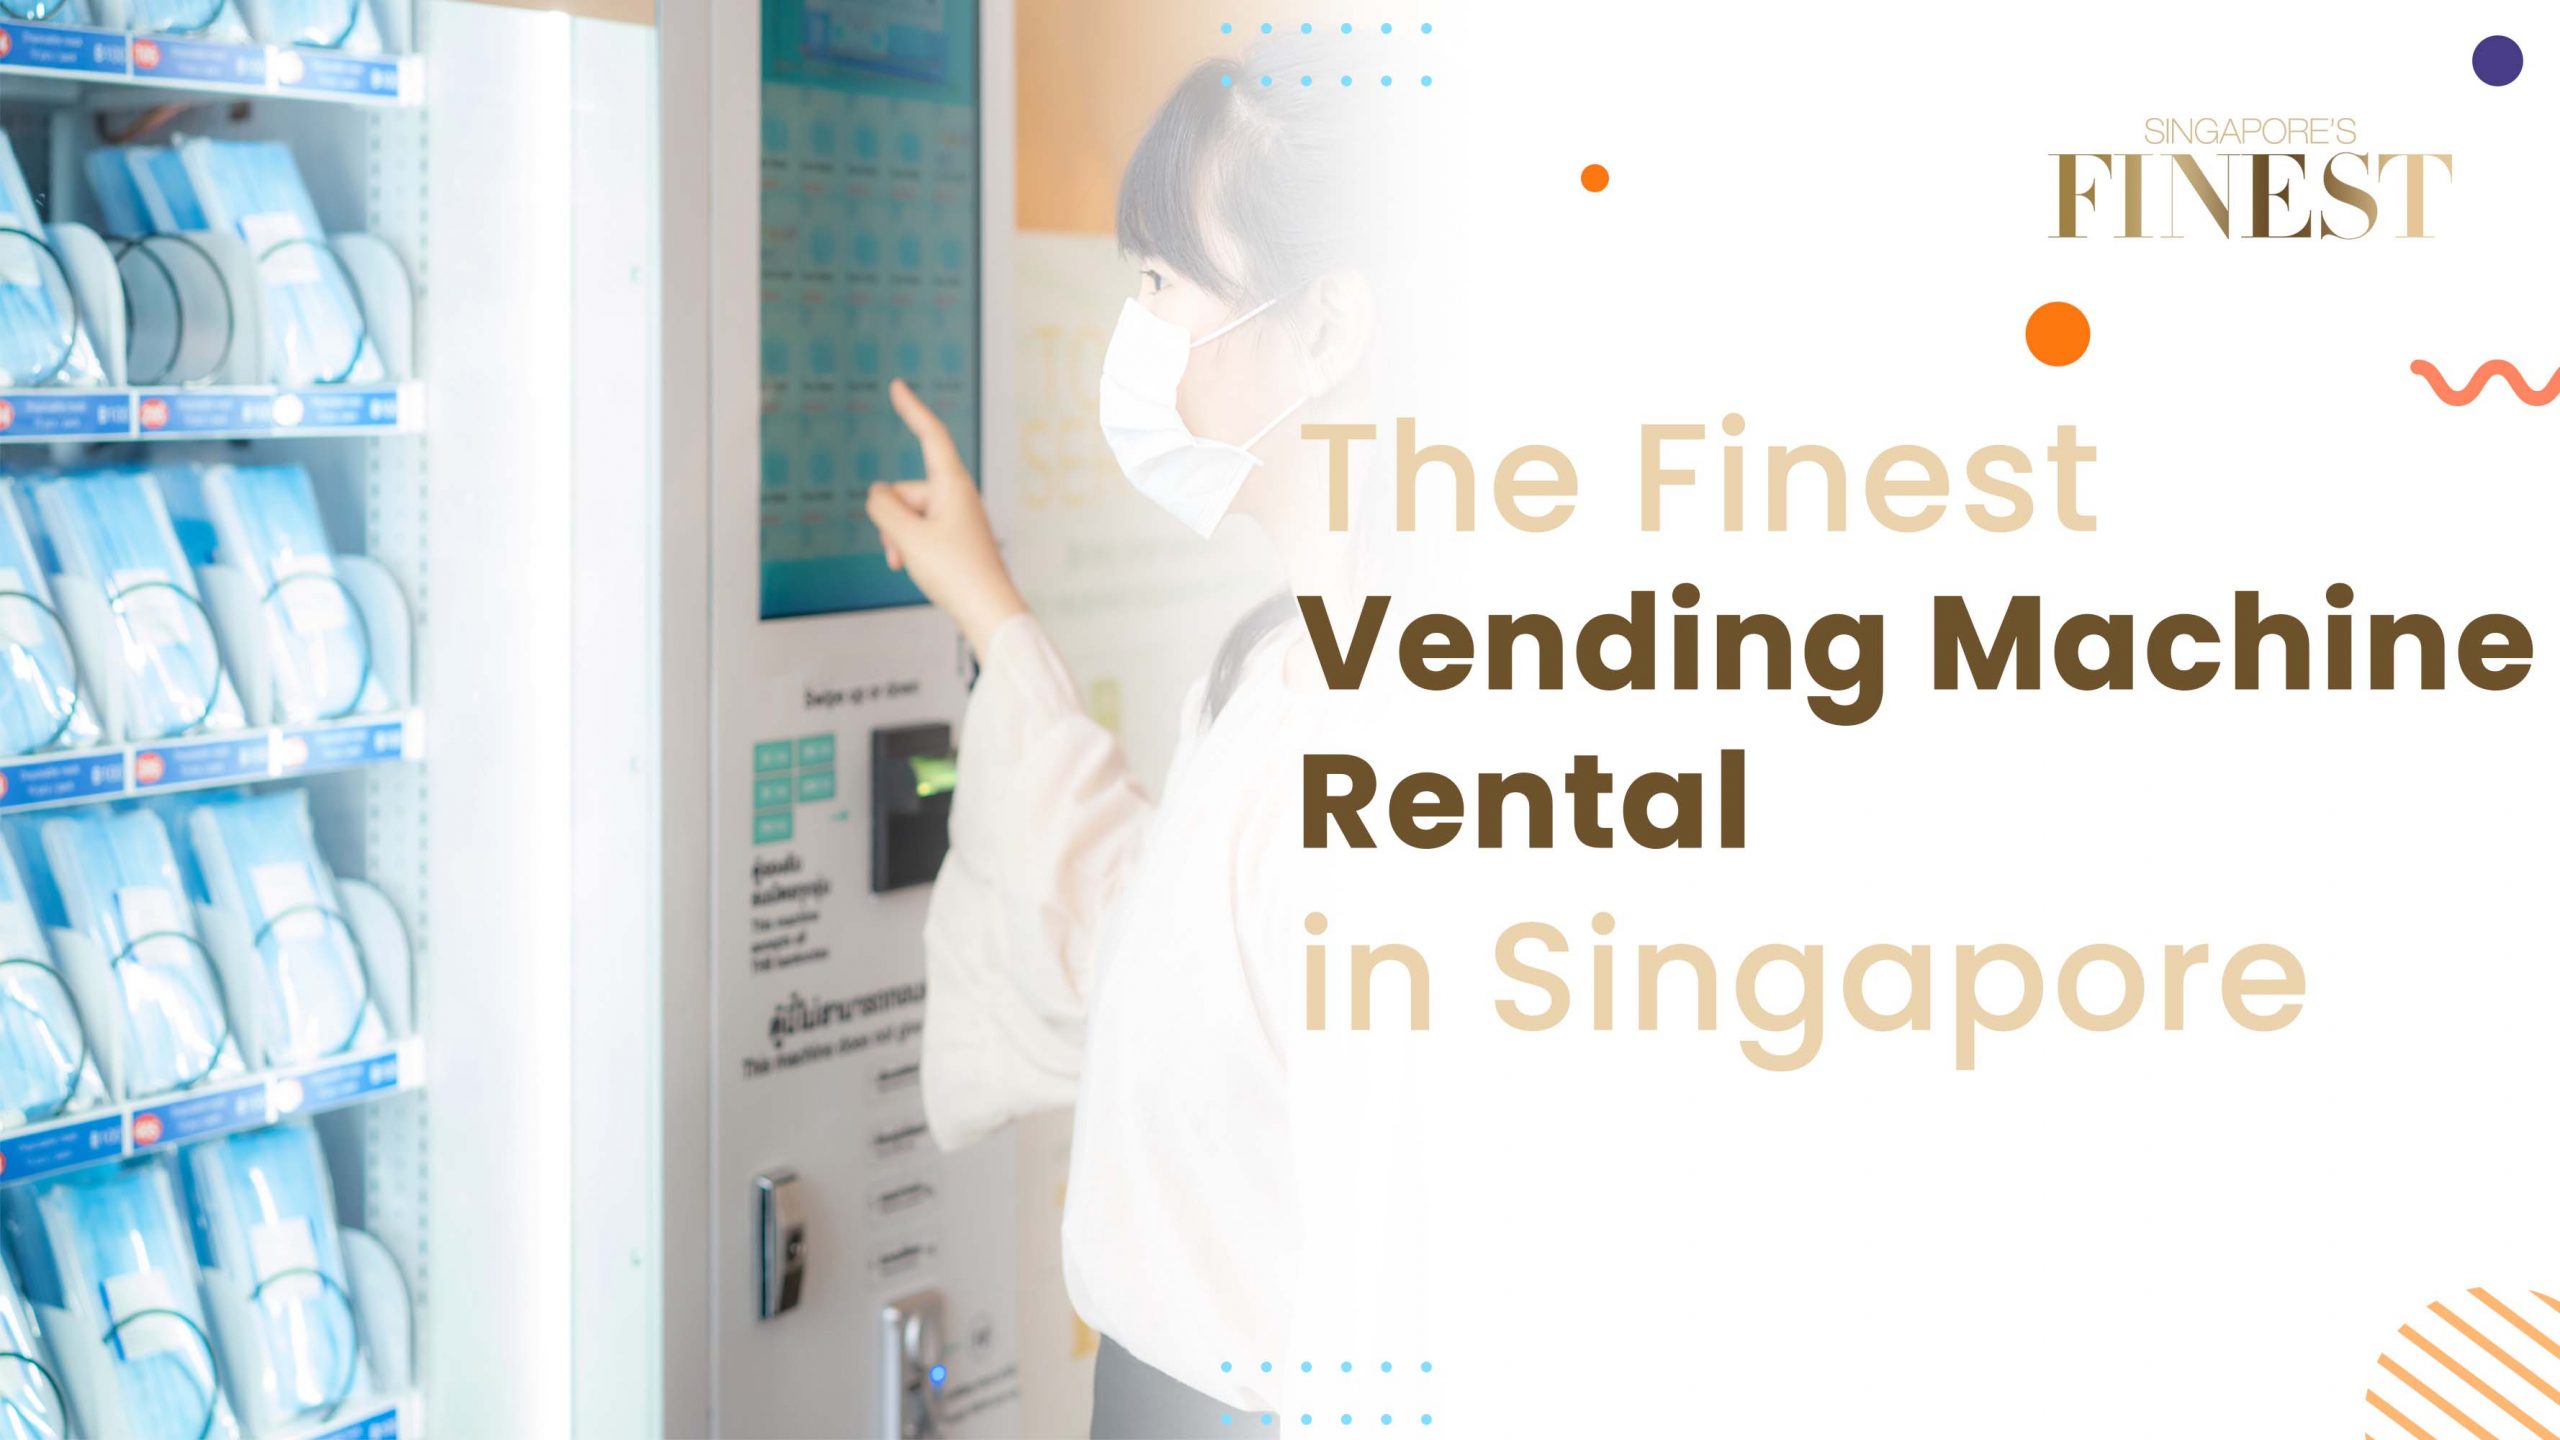 The Finest Vending Machine Rental in Singapore